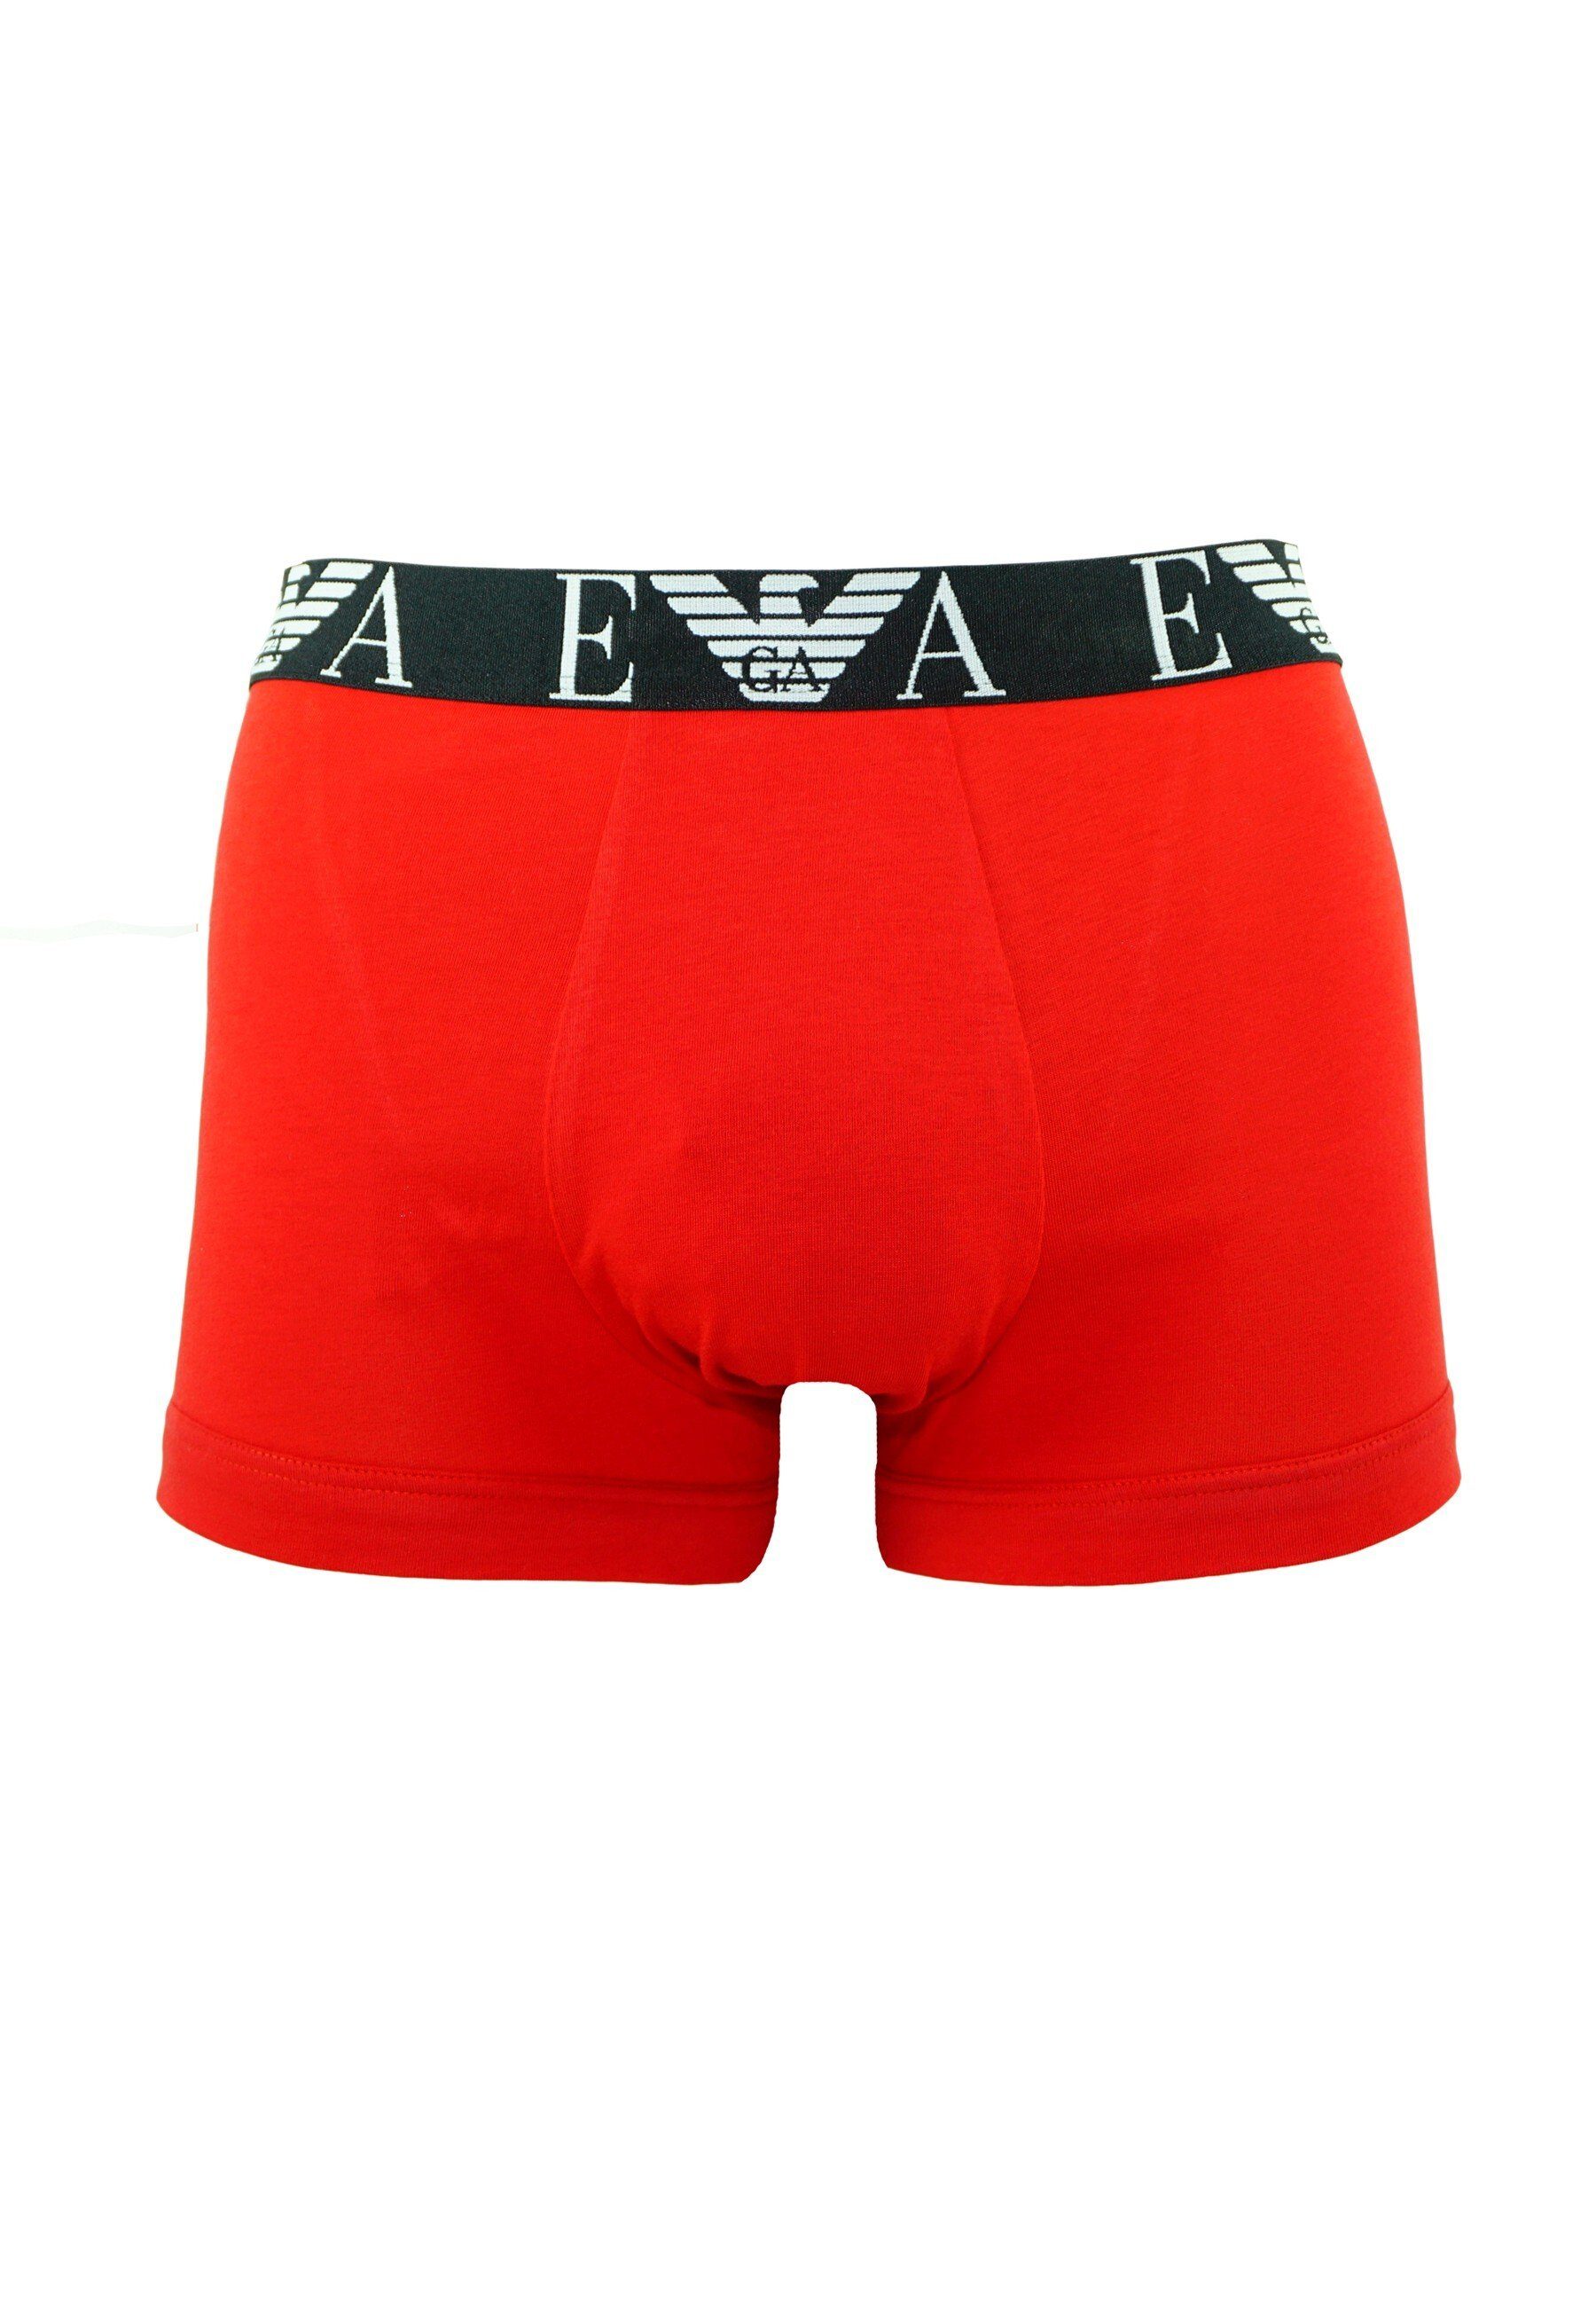 (3-St) Pack Trunks Shorts Rot/Grau/Schwarz Armani Emporio 3 Knit Boxershorts